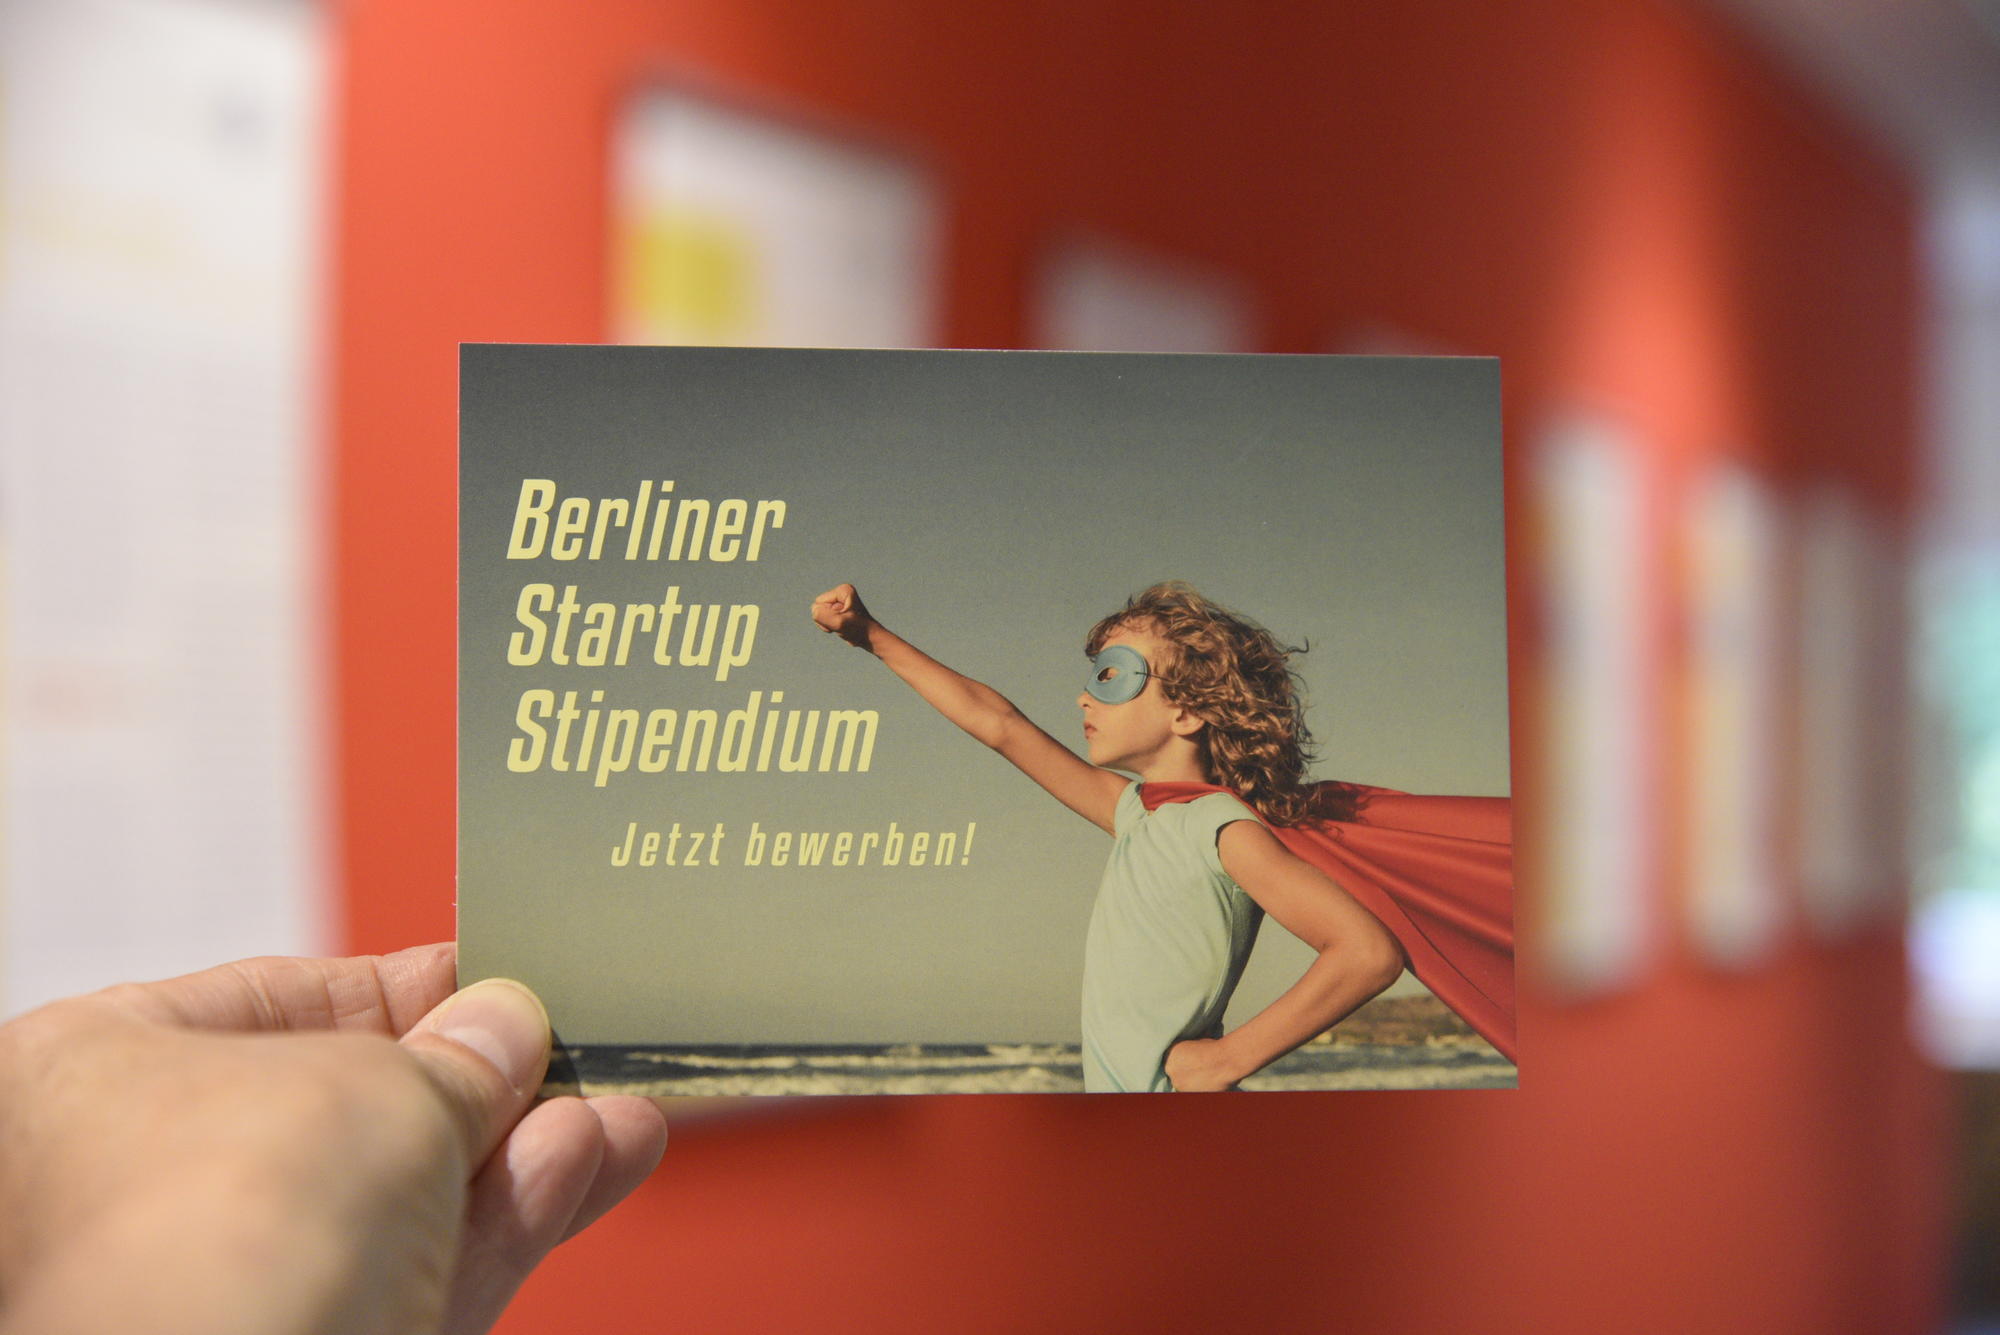 With the Berlin Startup Scholarship, Freie Universität Berlin, Technische Universität Berlin, Charité - Universitätsmedizin Berlin, and Humboldt-Universität zu Berlin have been supporting startups since 2016.